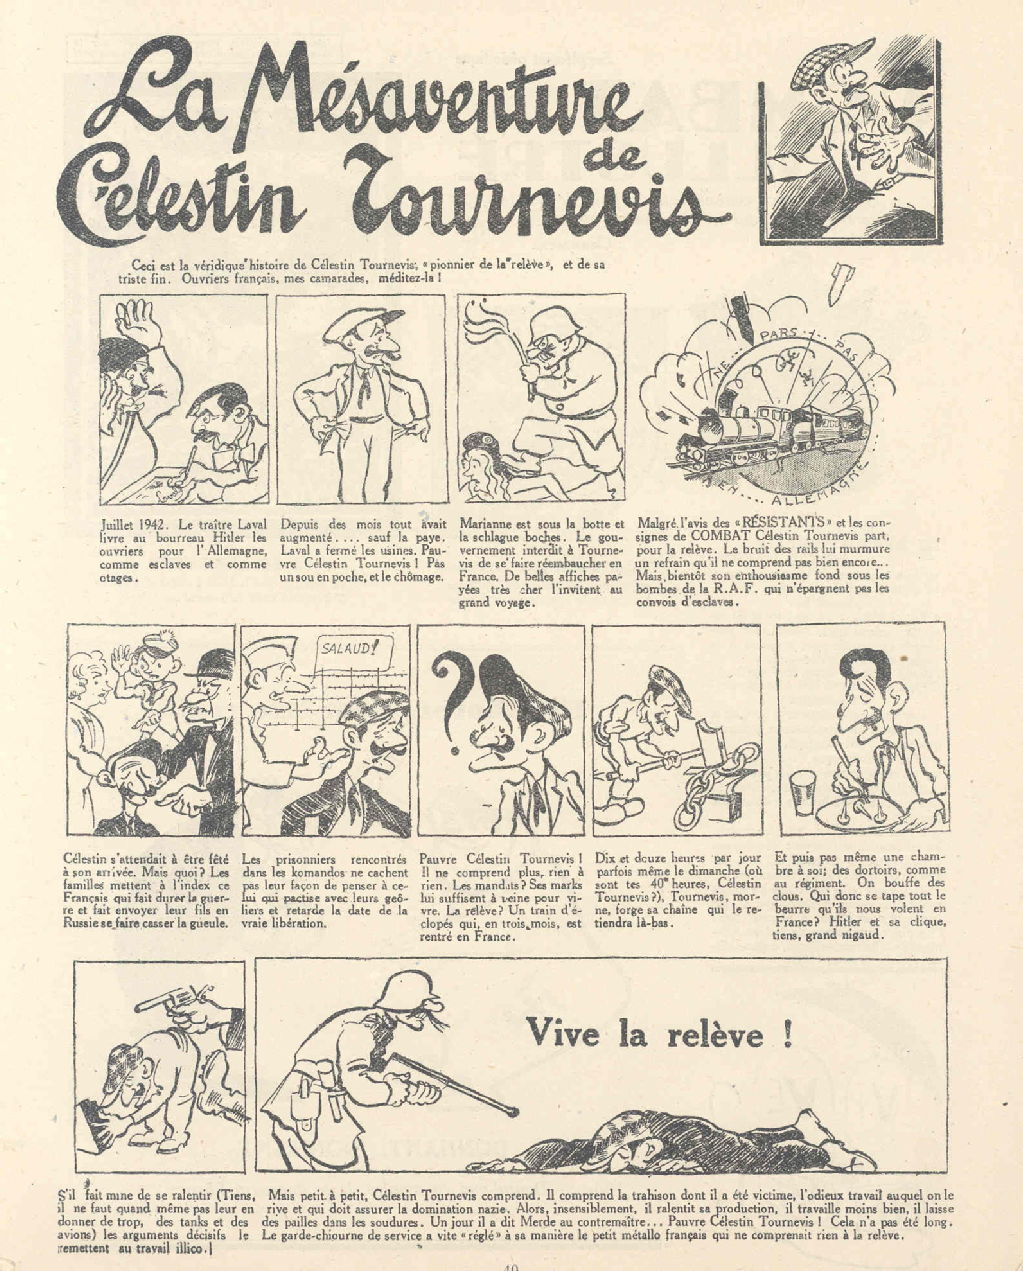 Examples of visual propaganda, c.1942-3